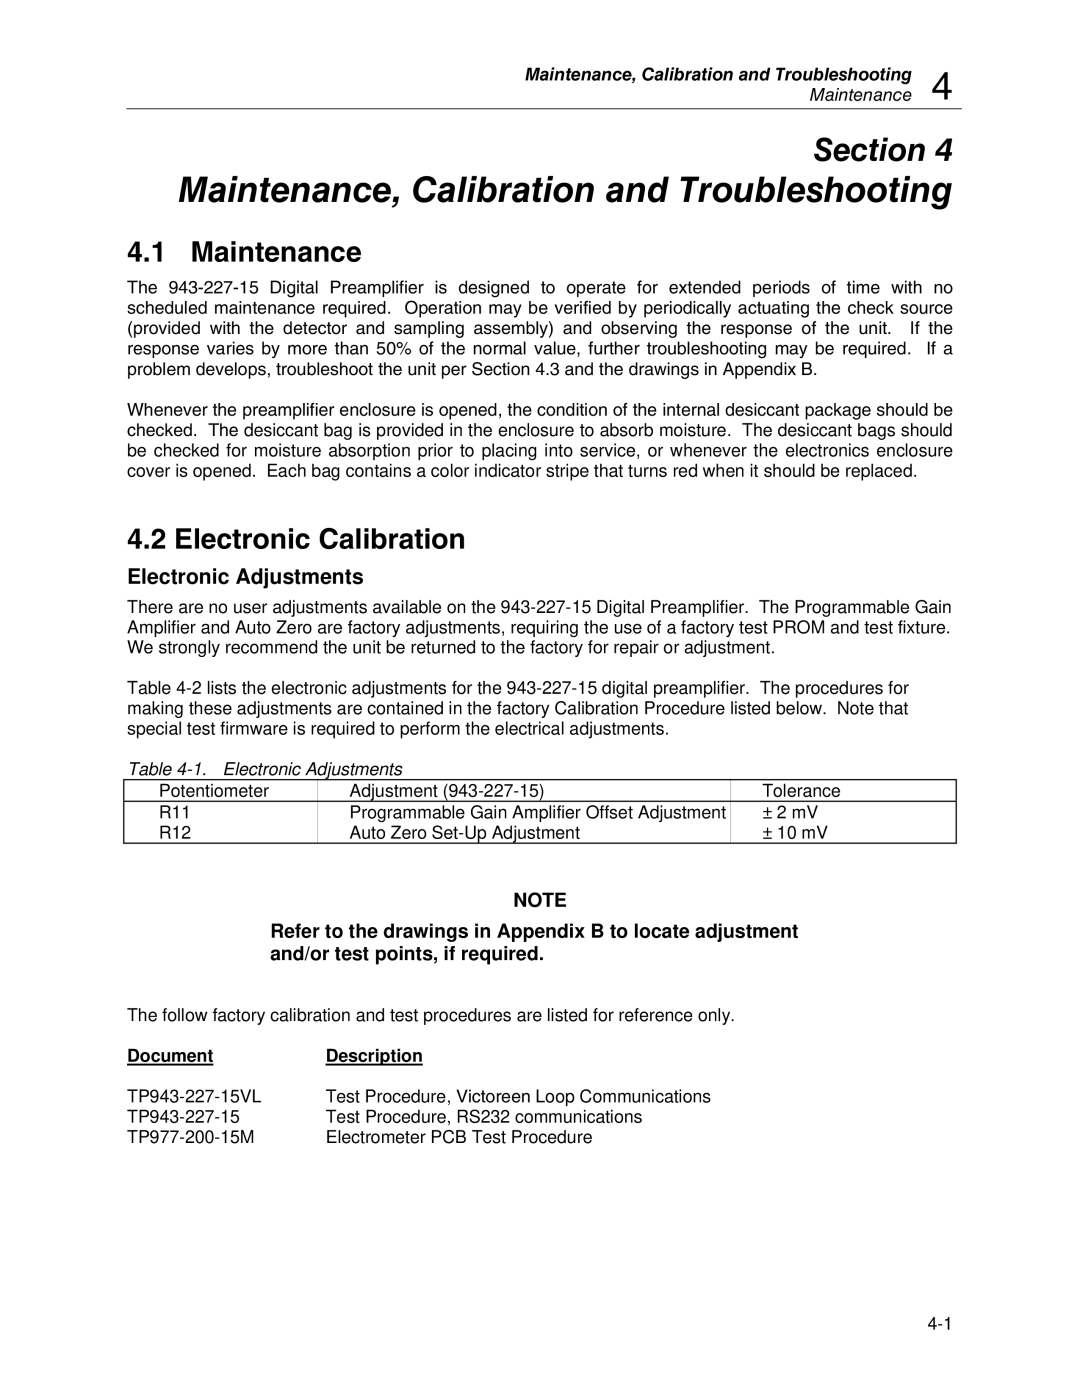 Fluke 943-227-15, 943-27 manual Maintenance, Calibration and Troubleshooting, Electronic Calibration, Electronic Adjustments 